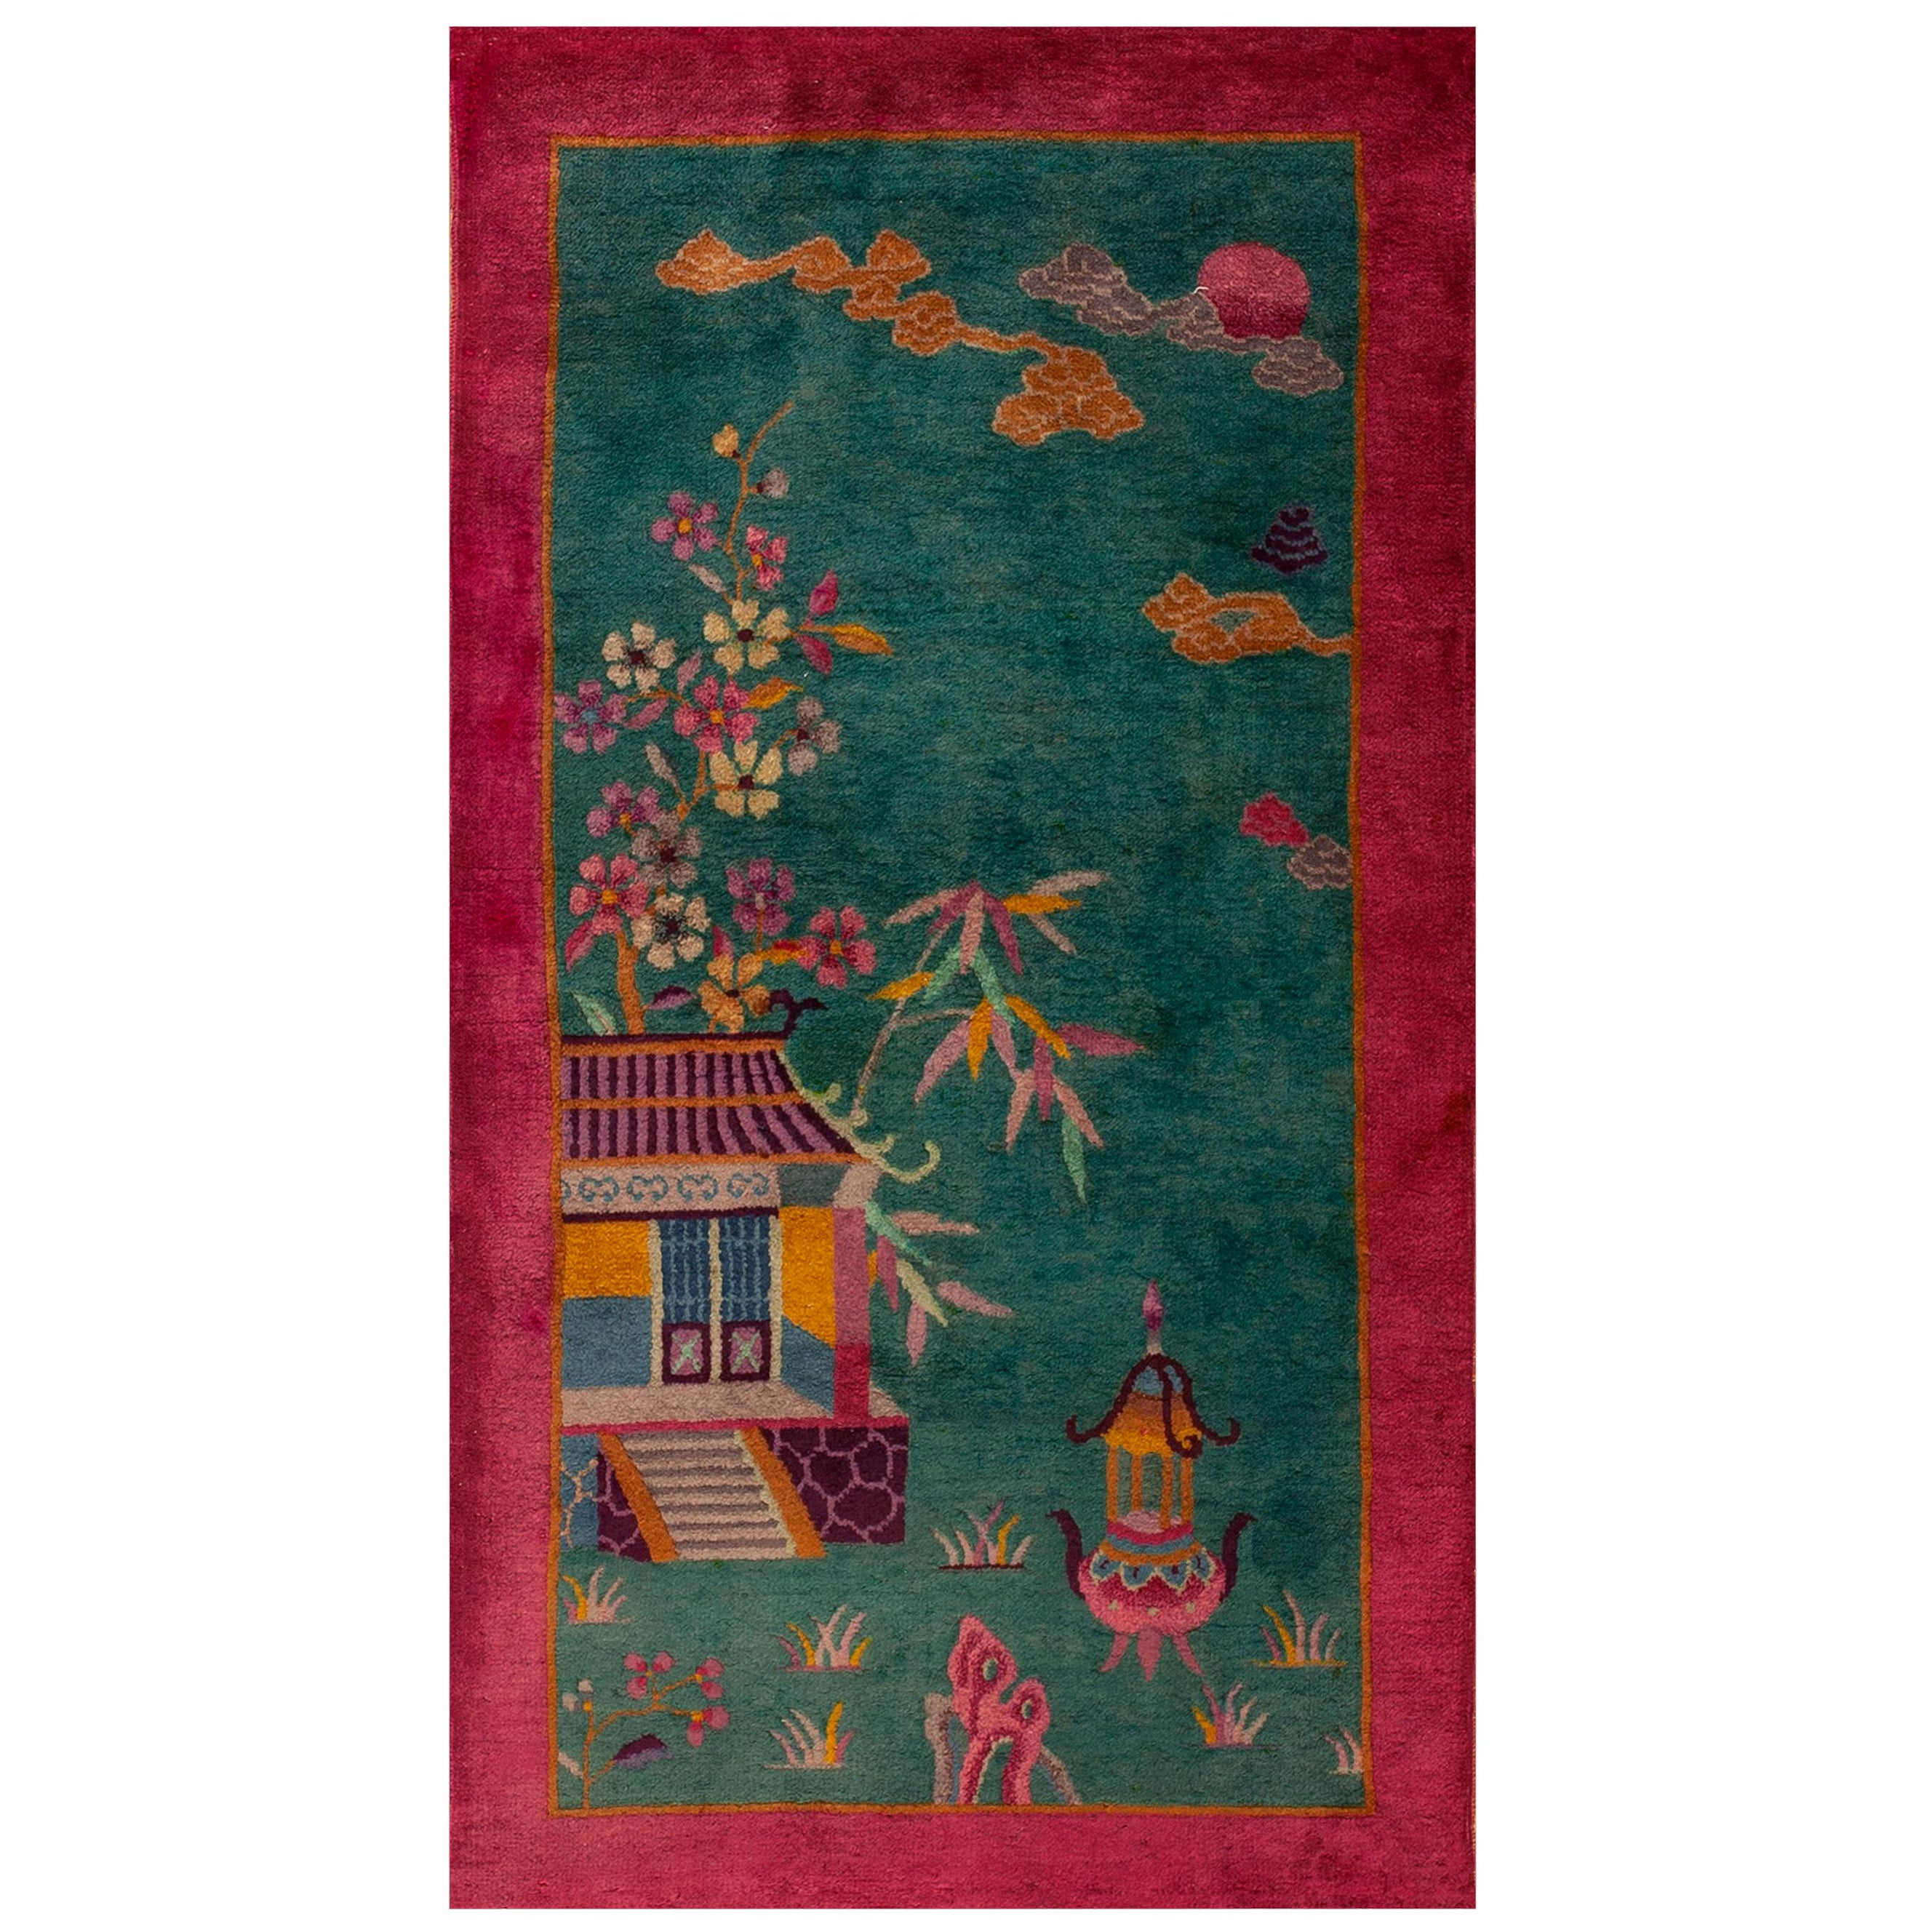 1920s Chinese Art Deco Carpet ( 2' 6'' x 4' 5'' - 76 x 134 cm ) For Sale